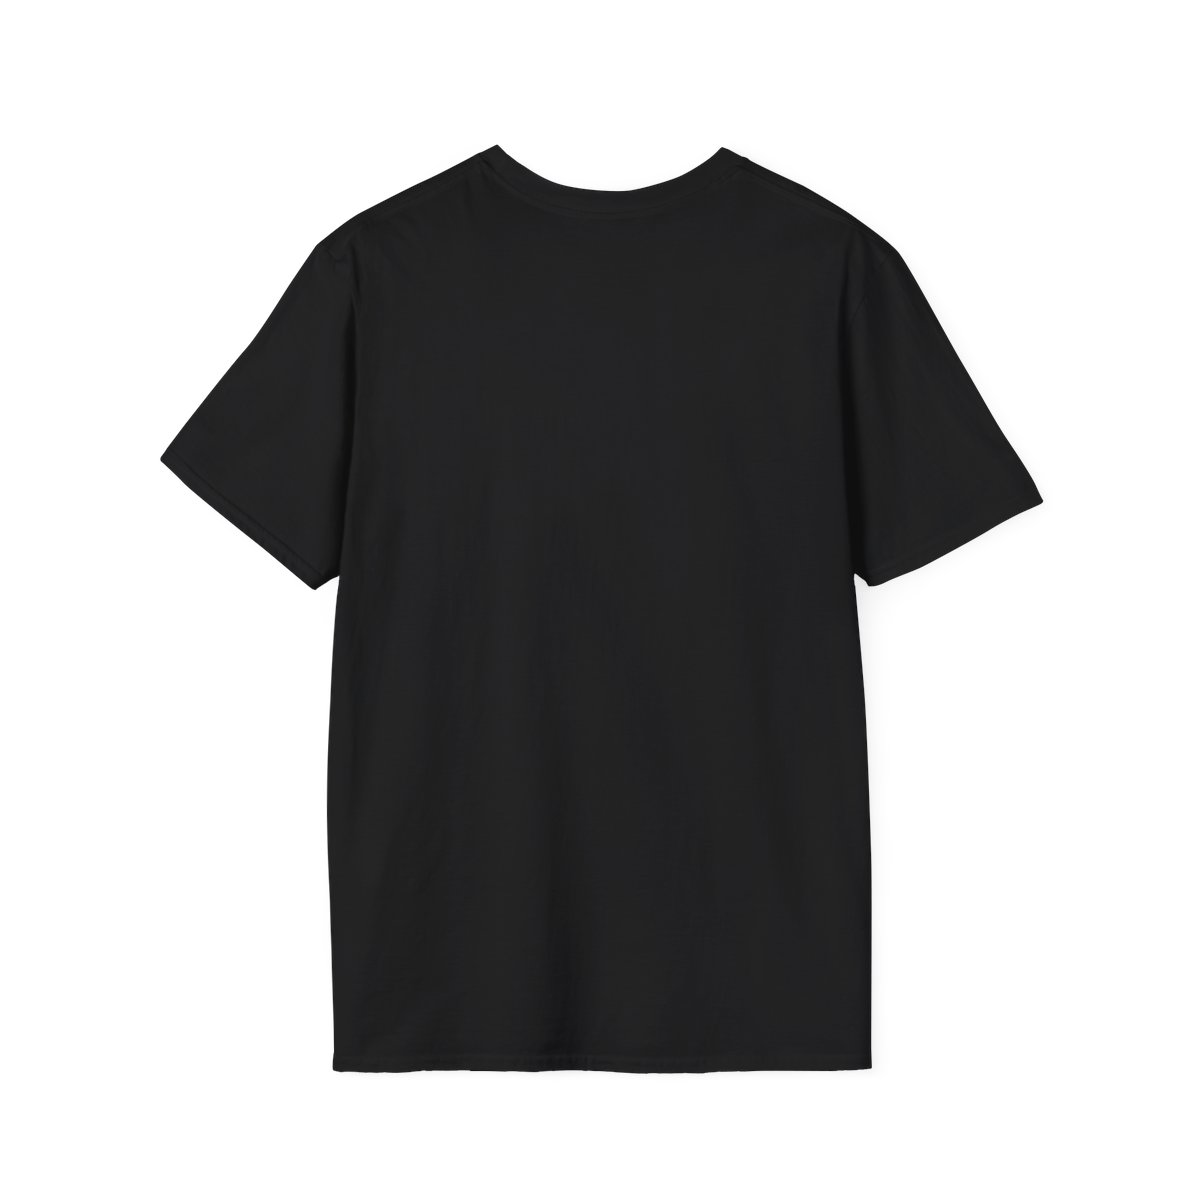 TH Crew Unisex Softstyle T-Shirt US product thumbnail image